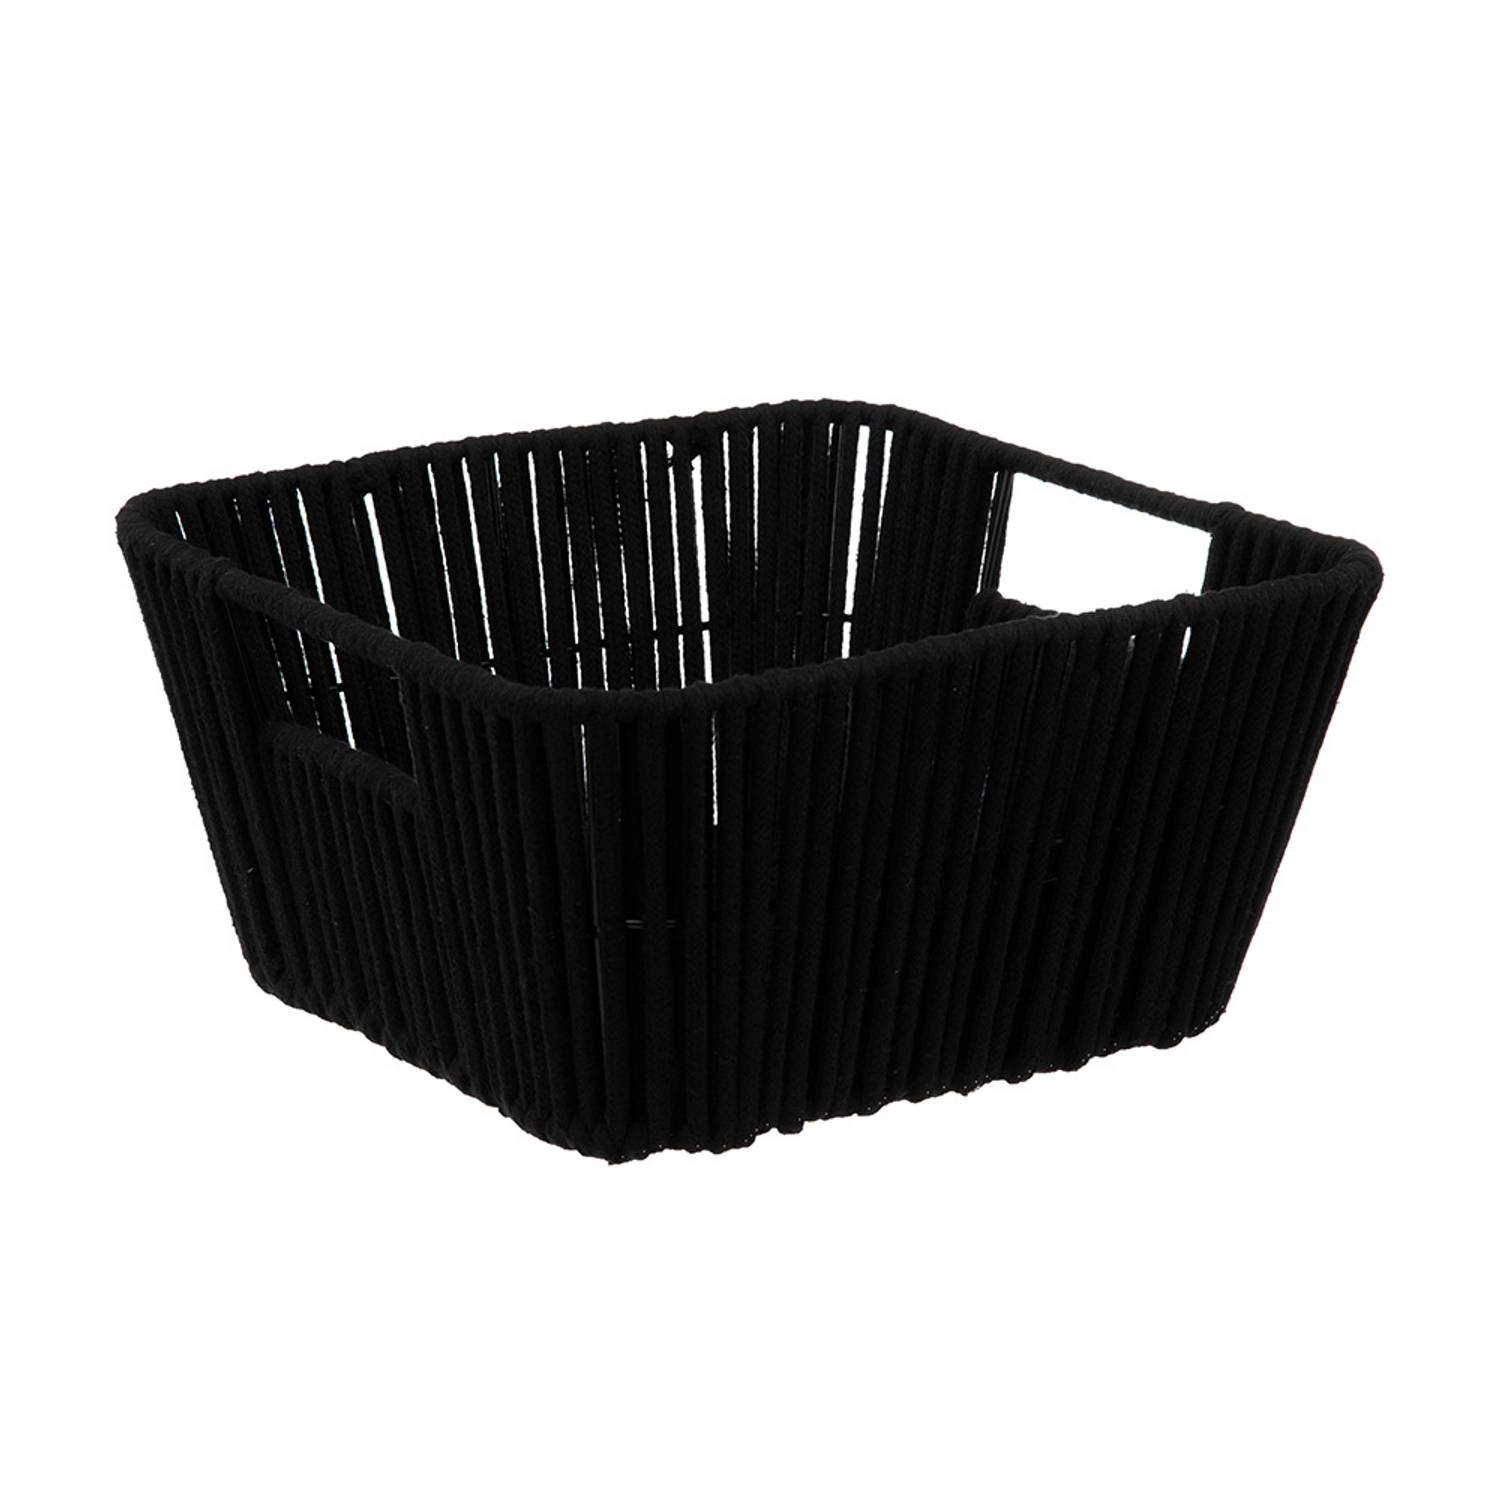 Five® Zwarte touw gespannen manden medium - Medium - Nestbaar & Decoratief